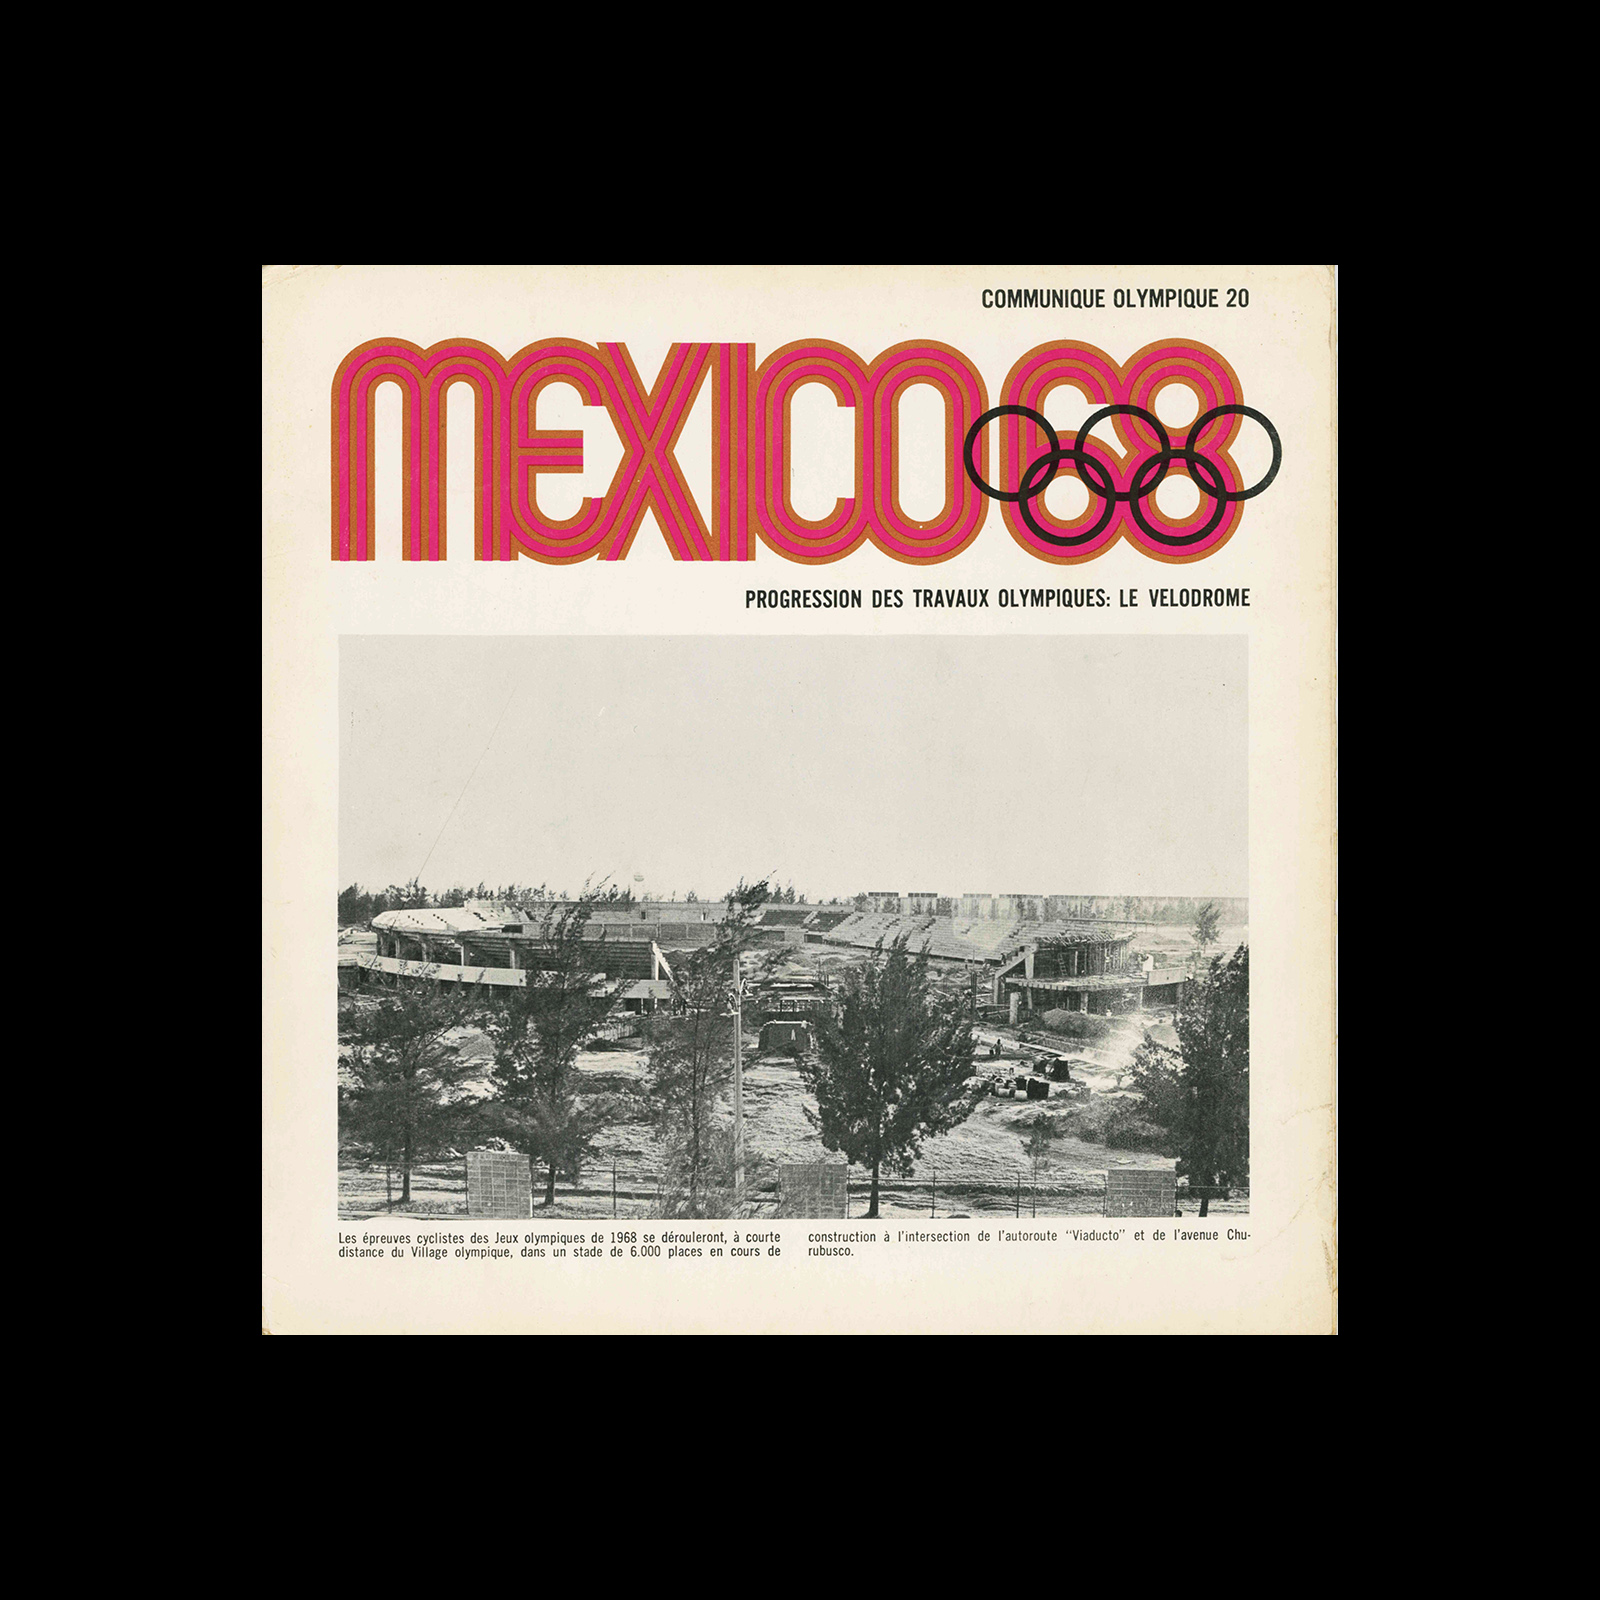 Mexico 1968, Communique Olympique 20, 1968. Designed by Lance Wyman